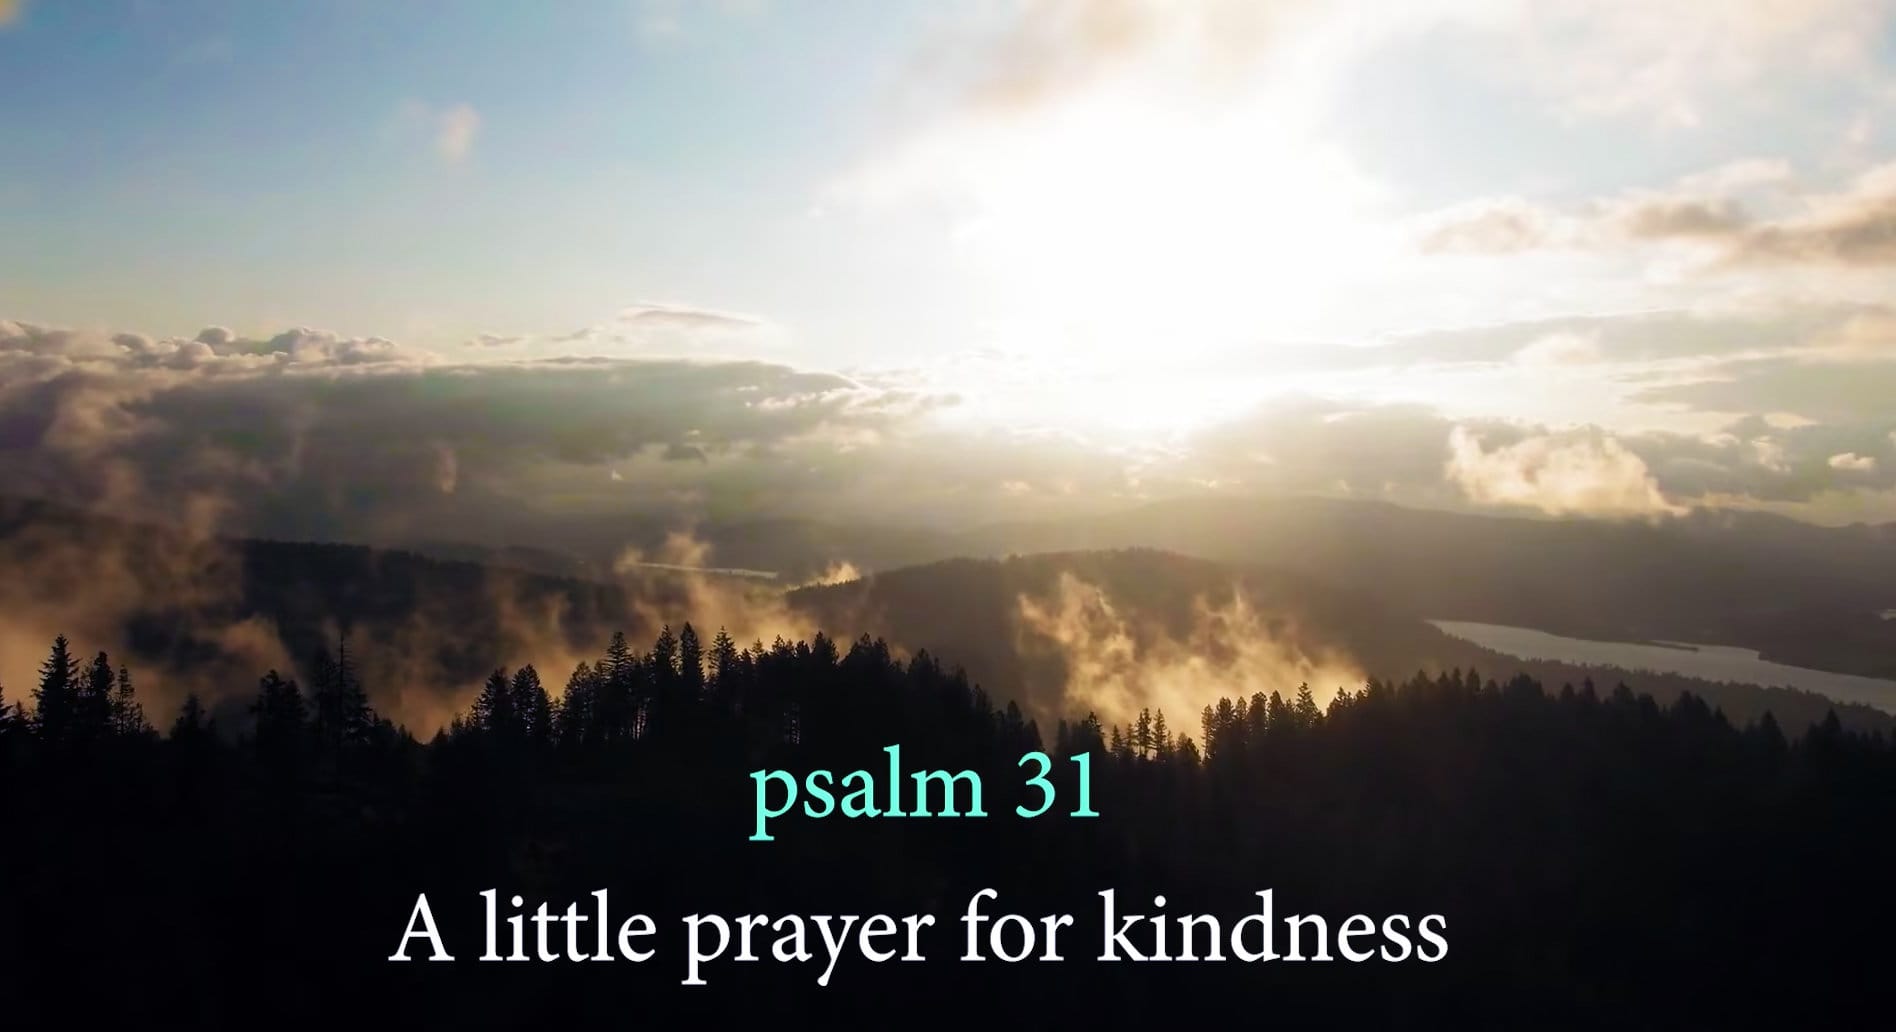 video: Video: A little prayer for kindness